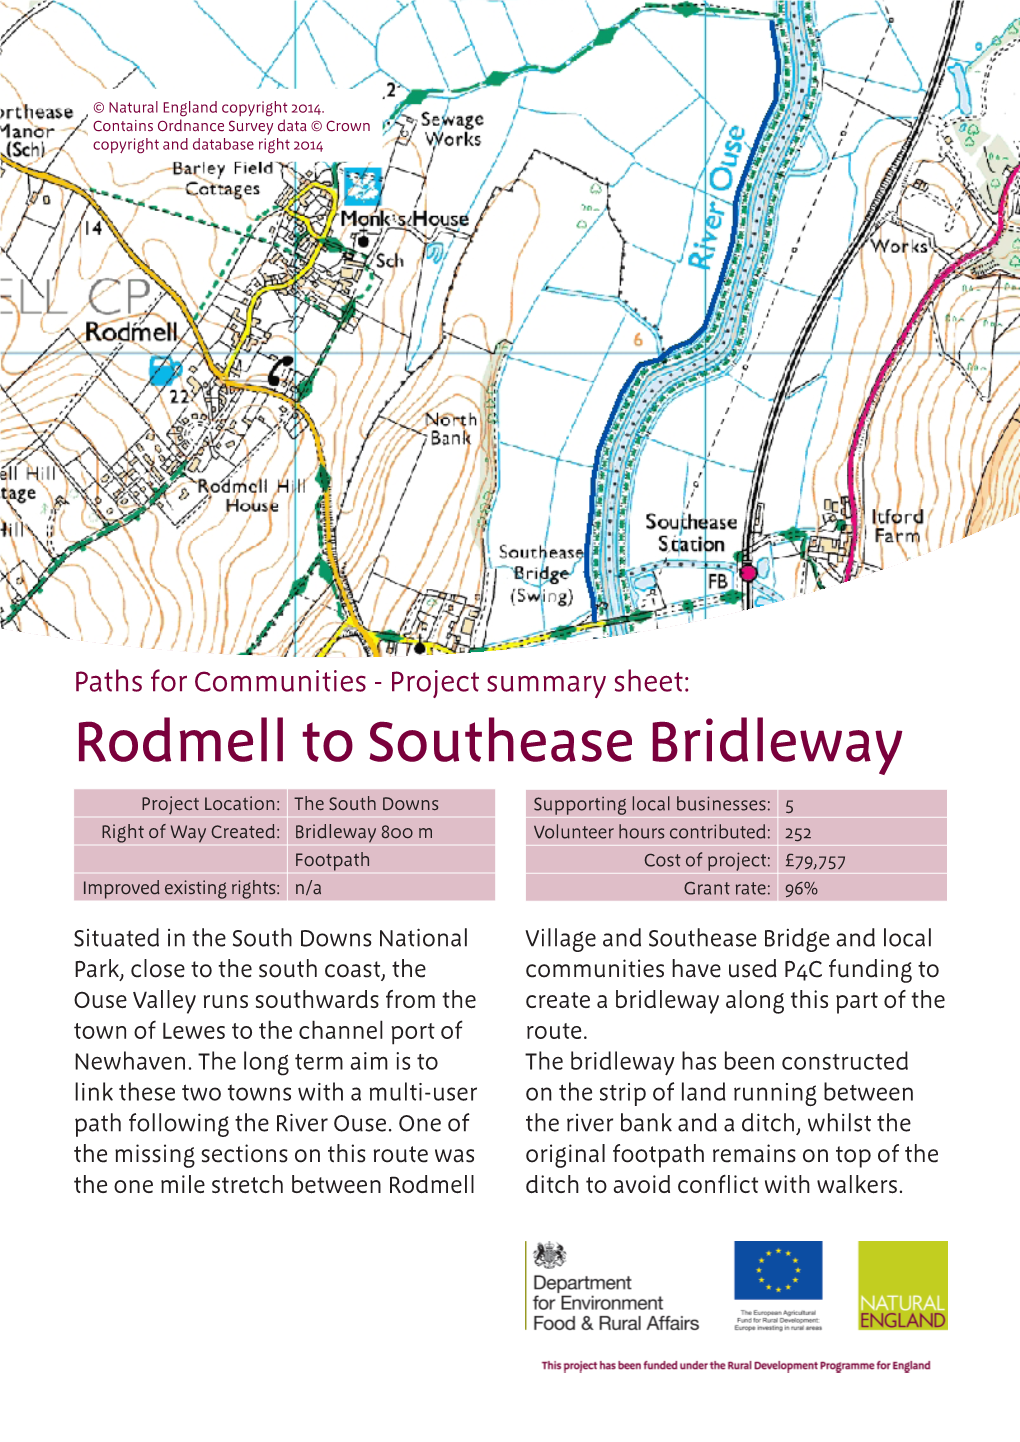 Rodmell to Southease Bridleway